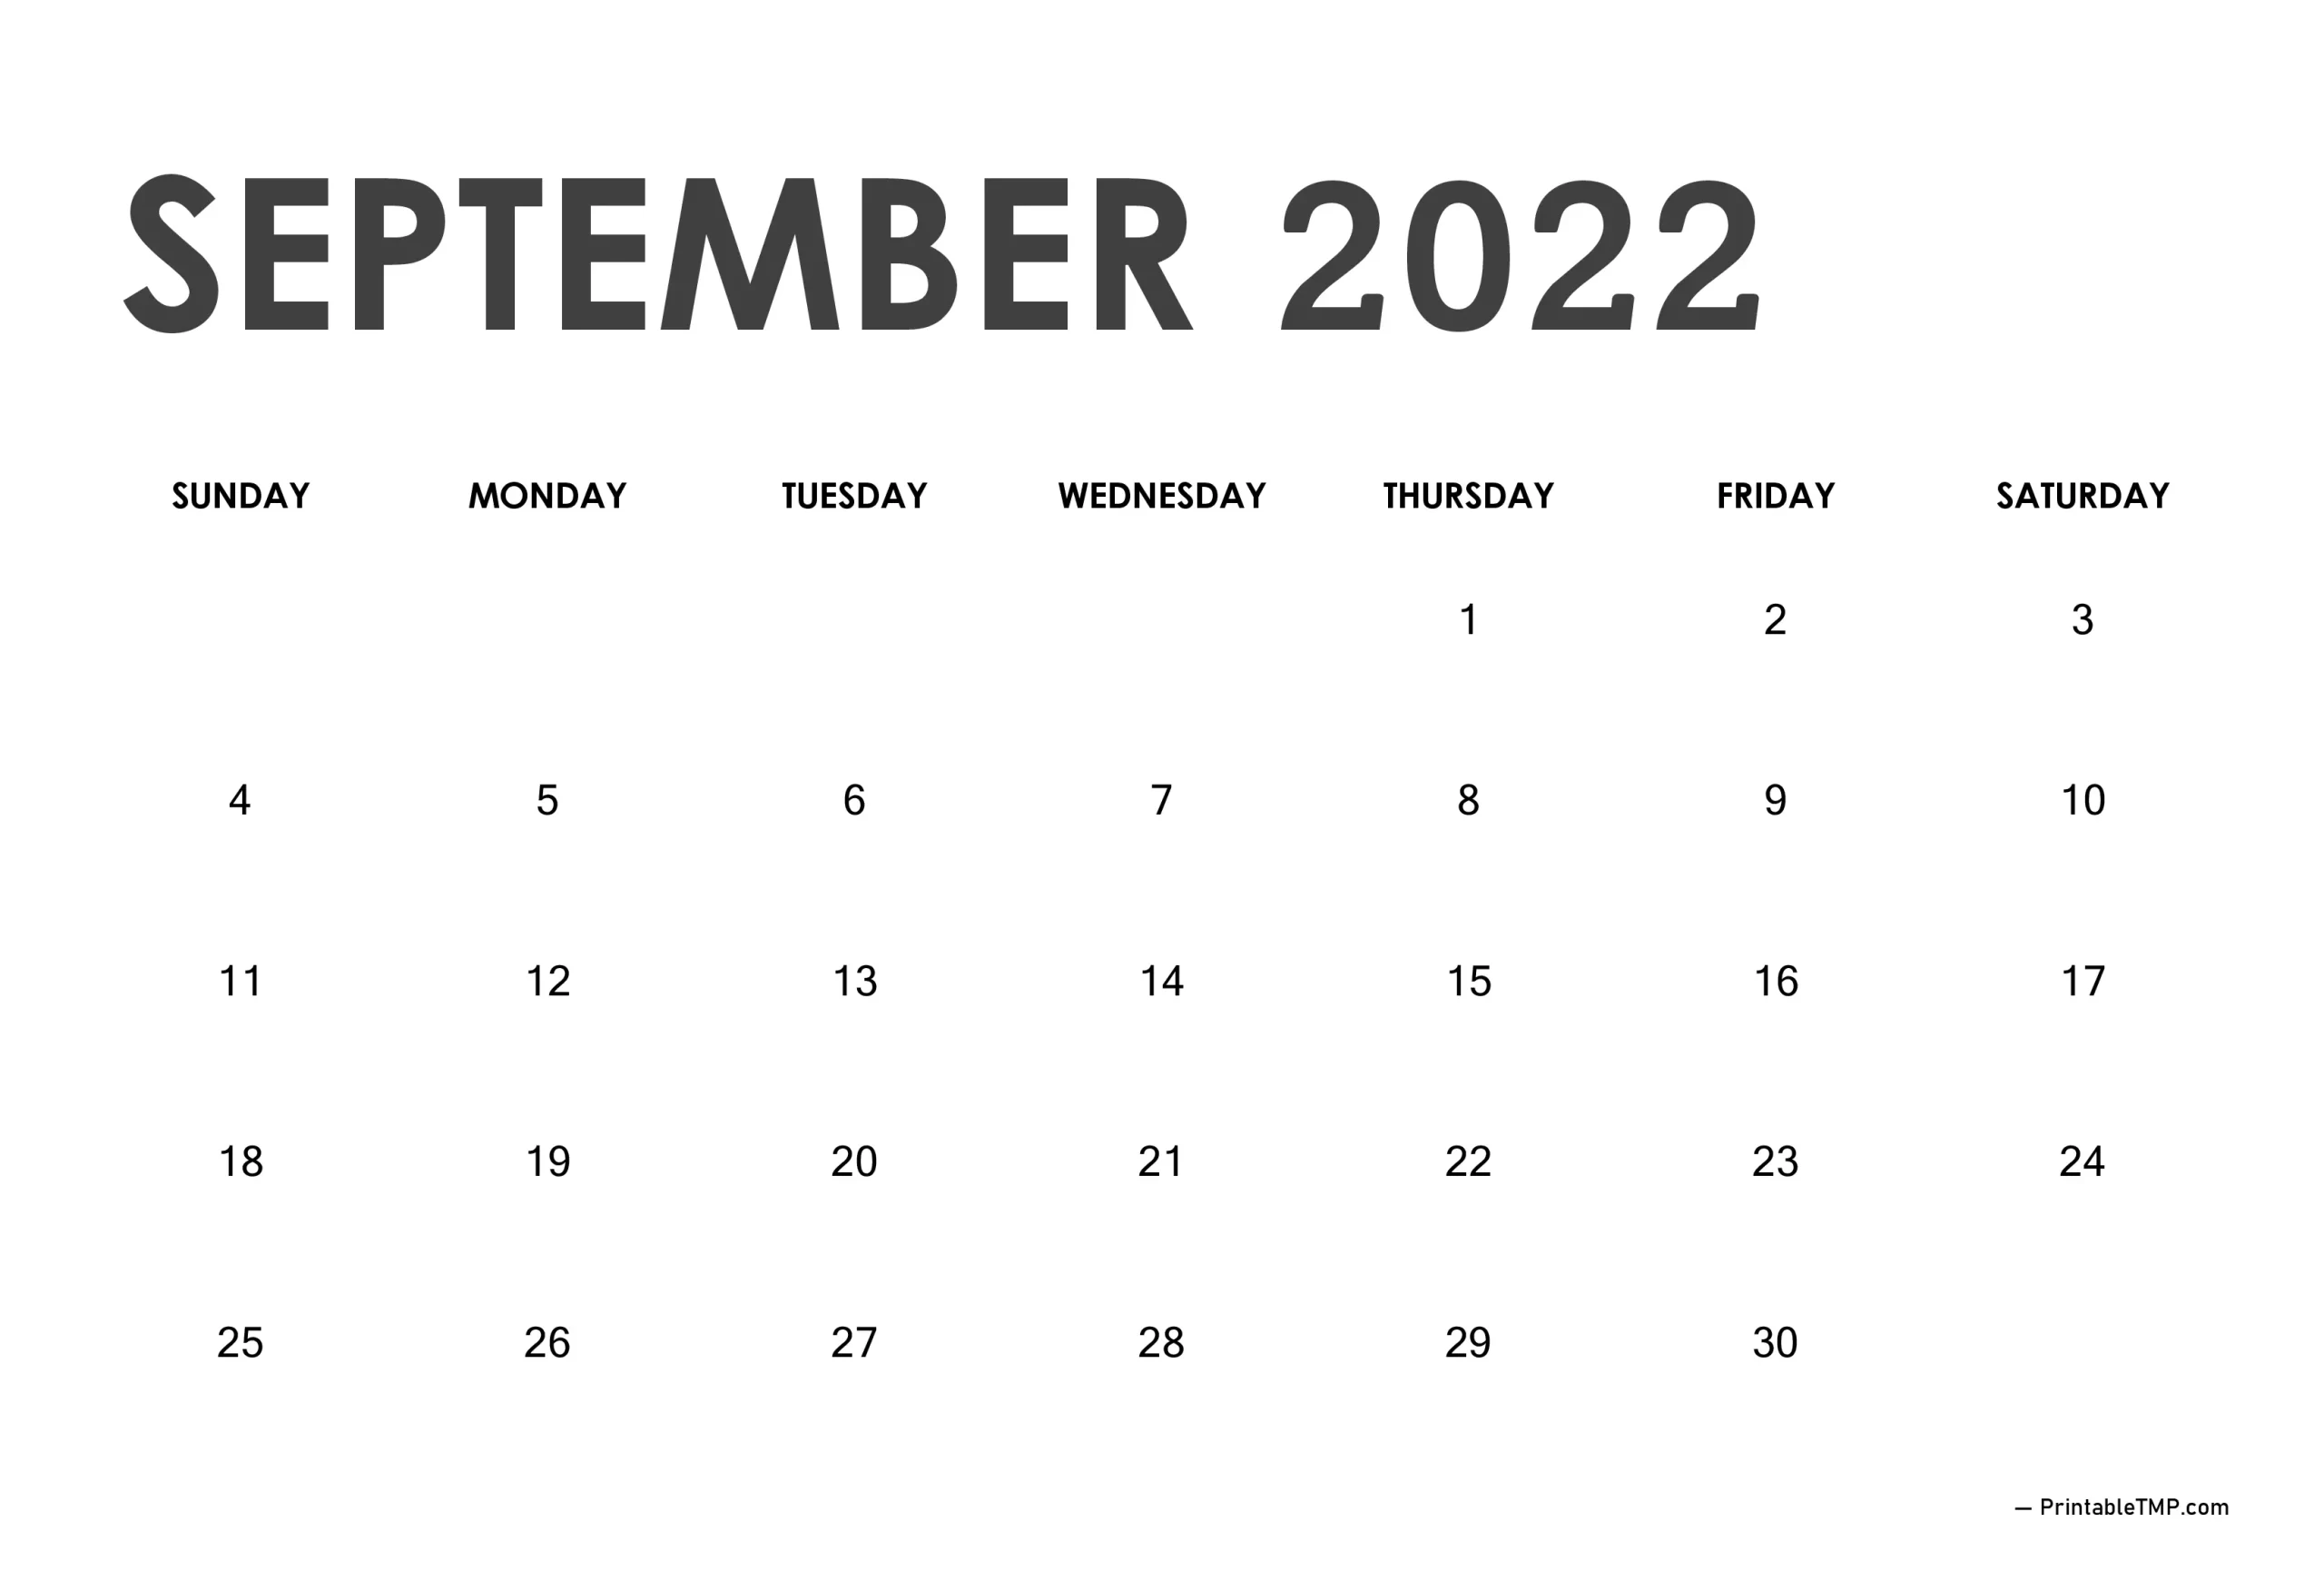 Free Printable September 2022 Calendar Template for Business